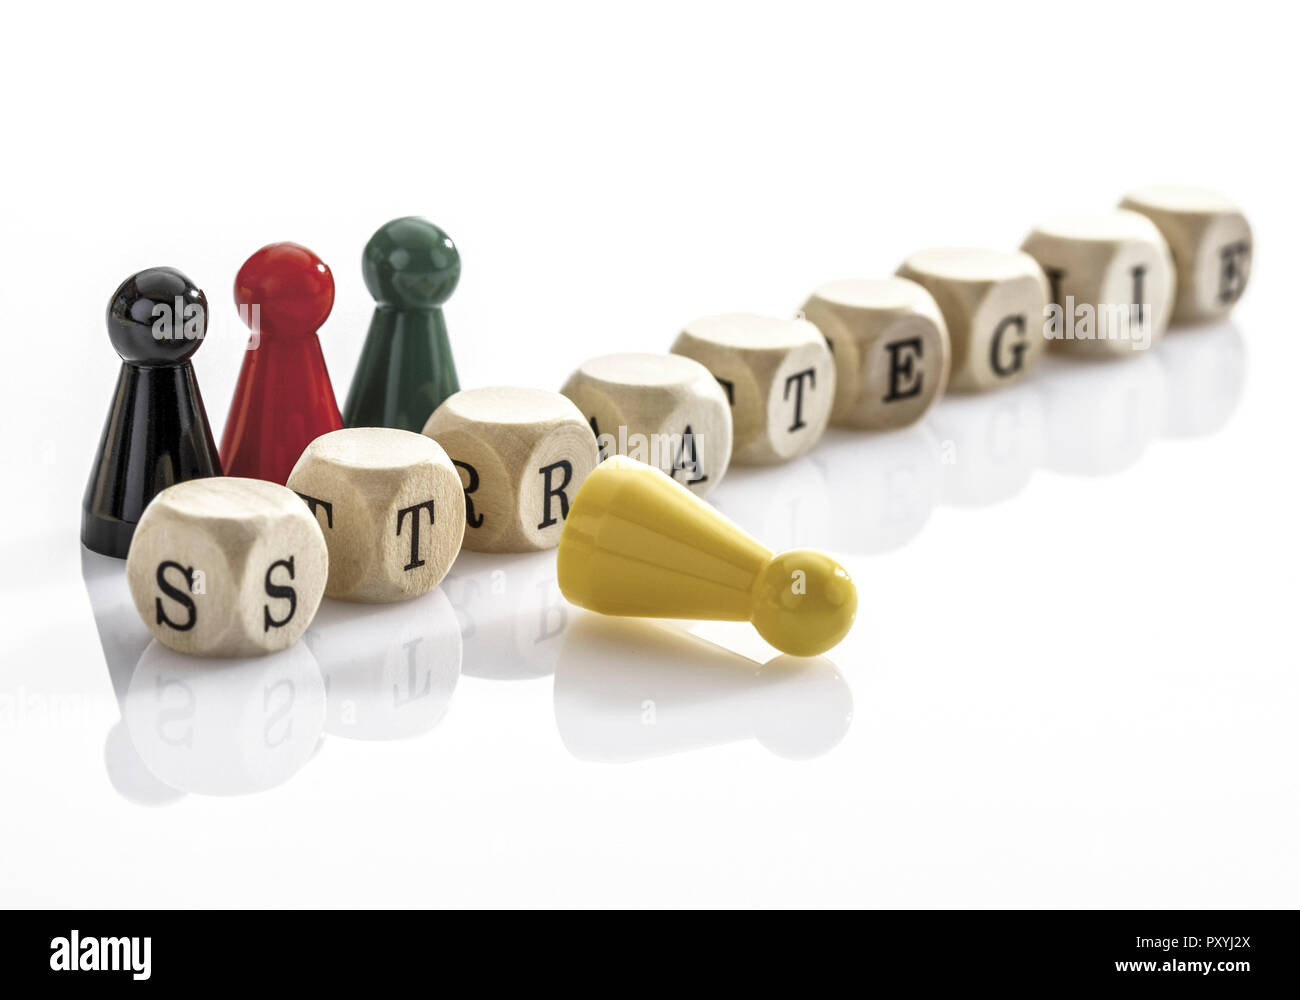 Wort Strategie aus Scrabble-Wuerfeln gebildet, Halmafiguren Stock Photo